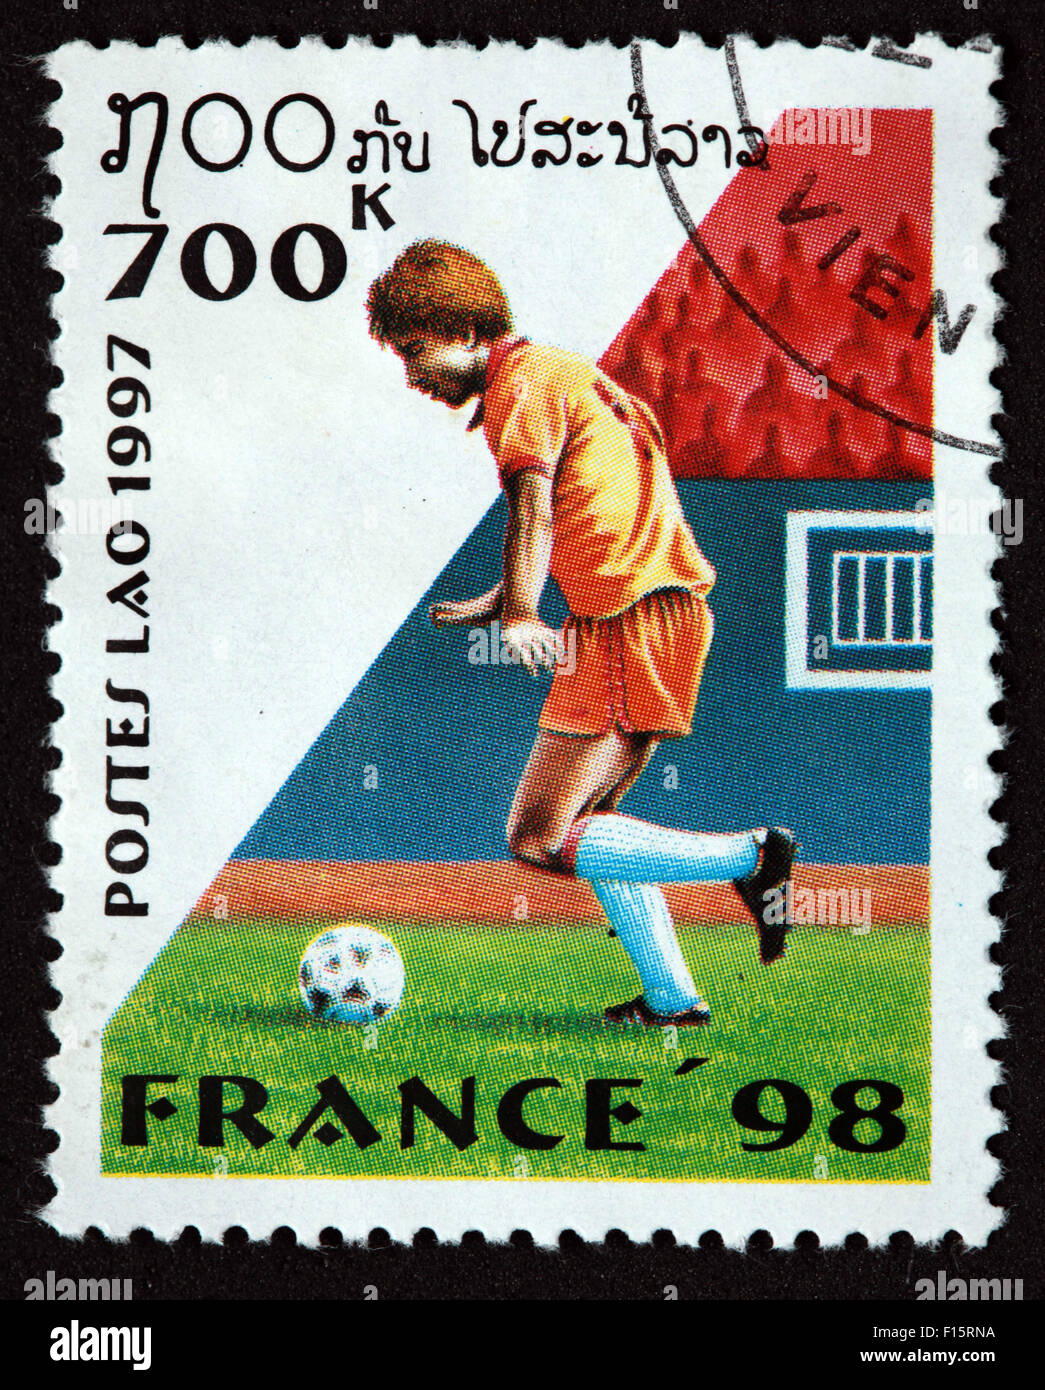 Postes Laos Laos 700K Frankreich 1998 98 Fußball Deportes World Cup Worldcup Sport Stempel Stockfoto